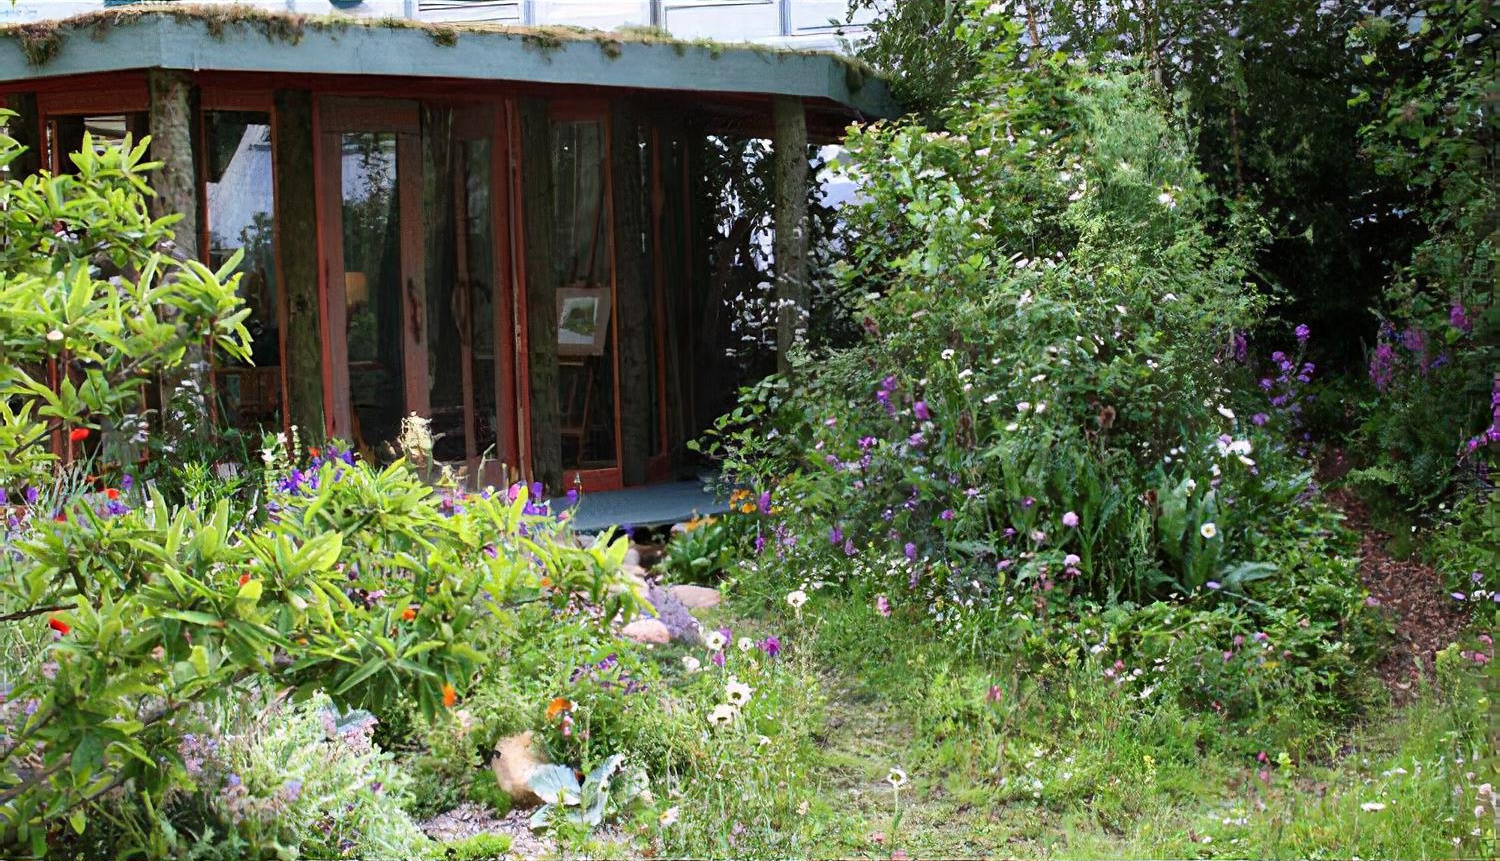 The SKYshades Wild Office by garden designer Marney Hall Chelsea Flower Show 2011